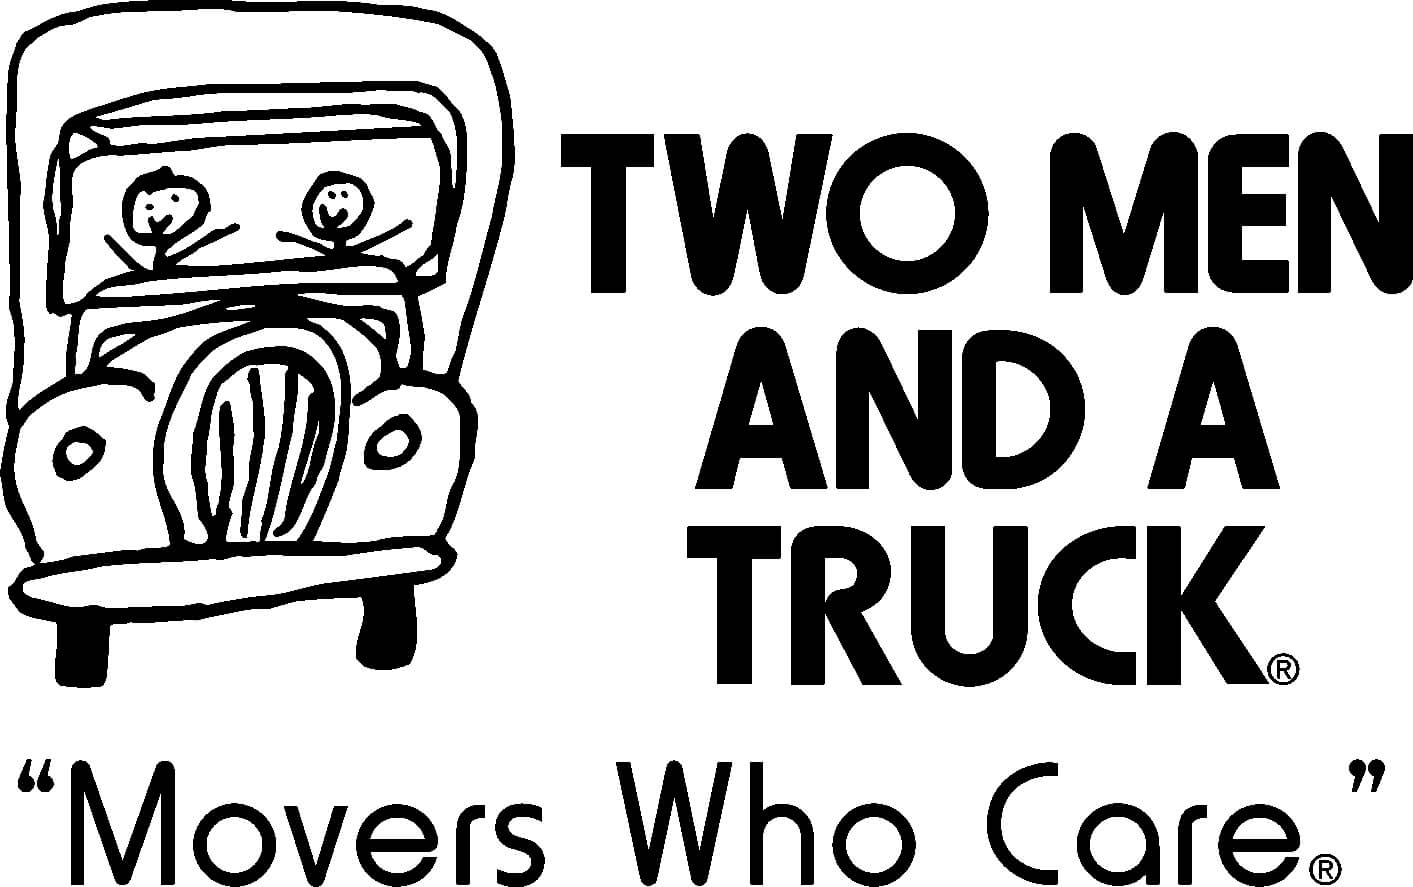 Two Men & a Truck logo